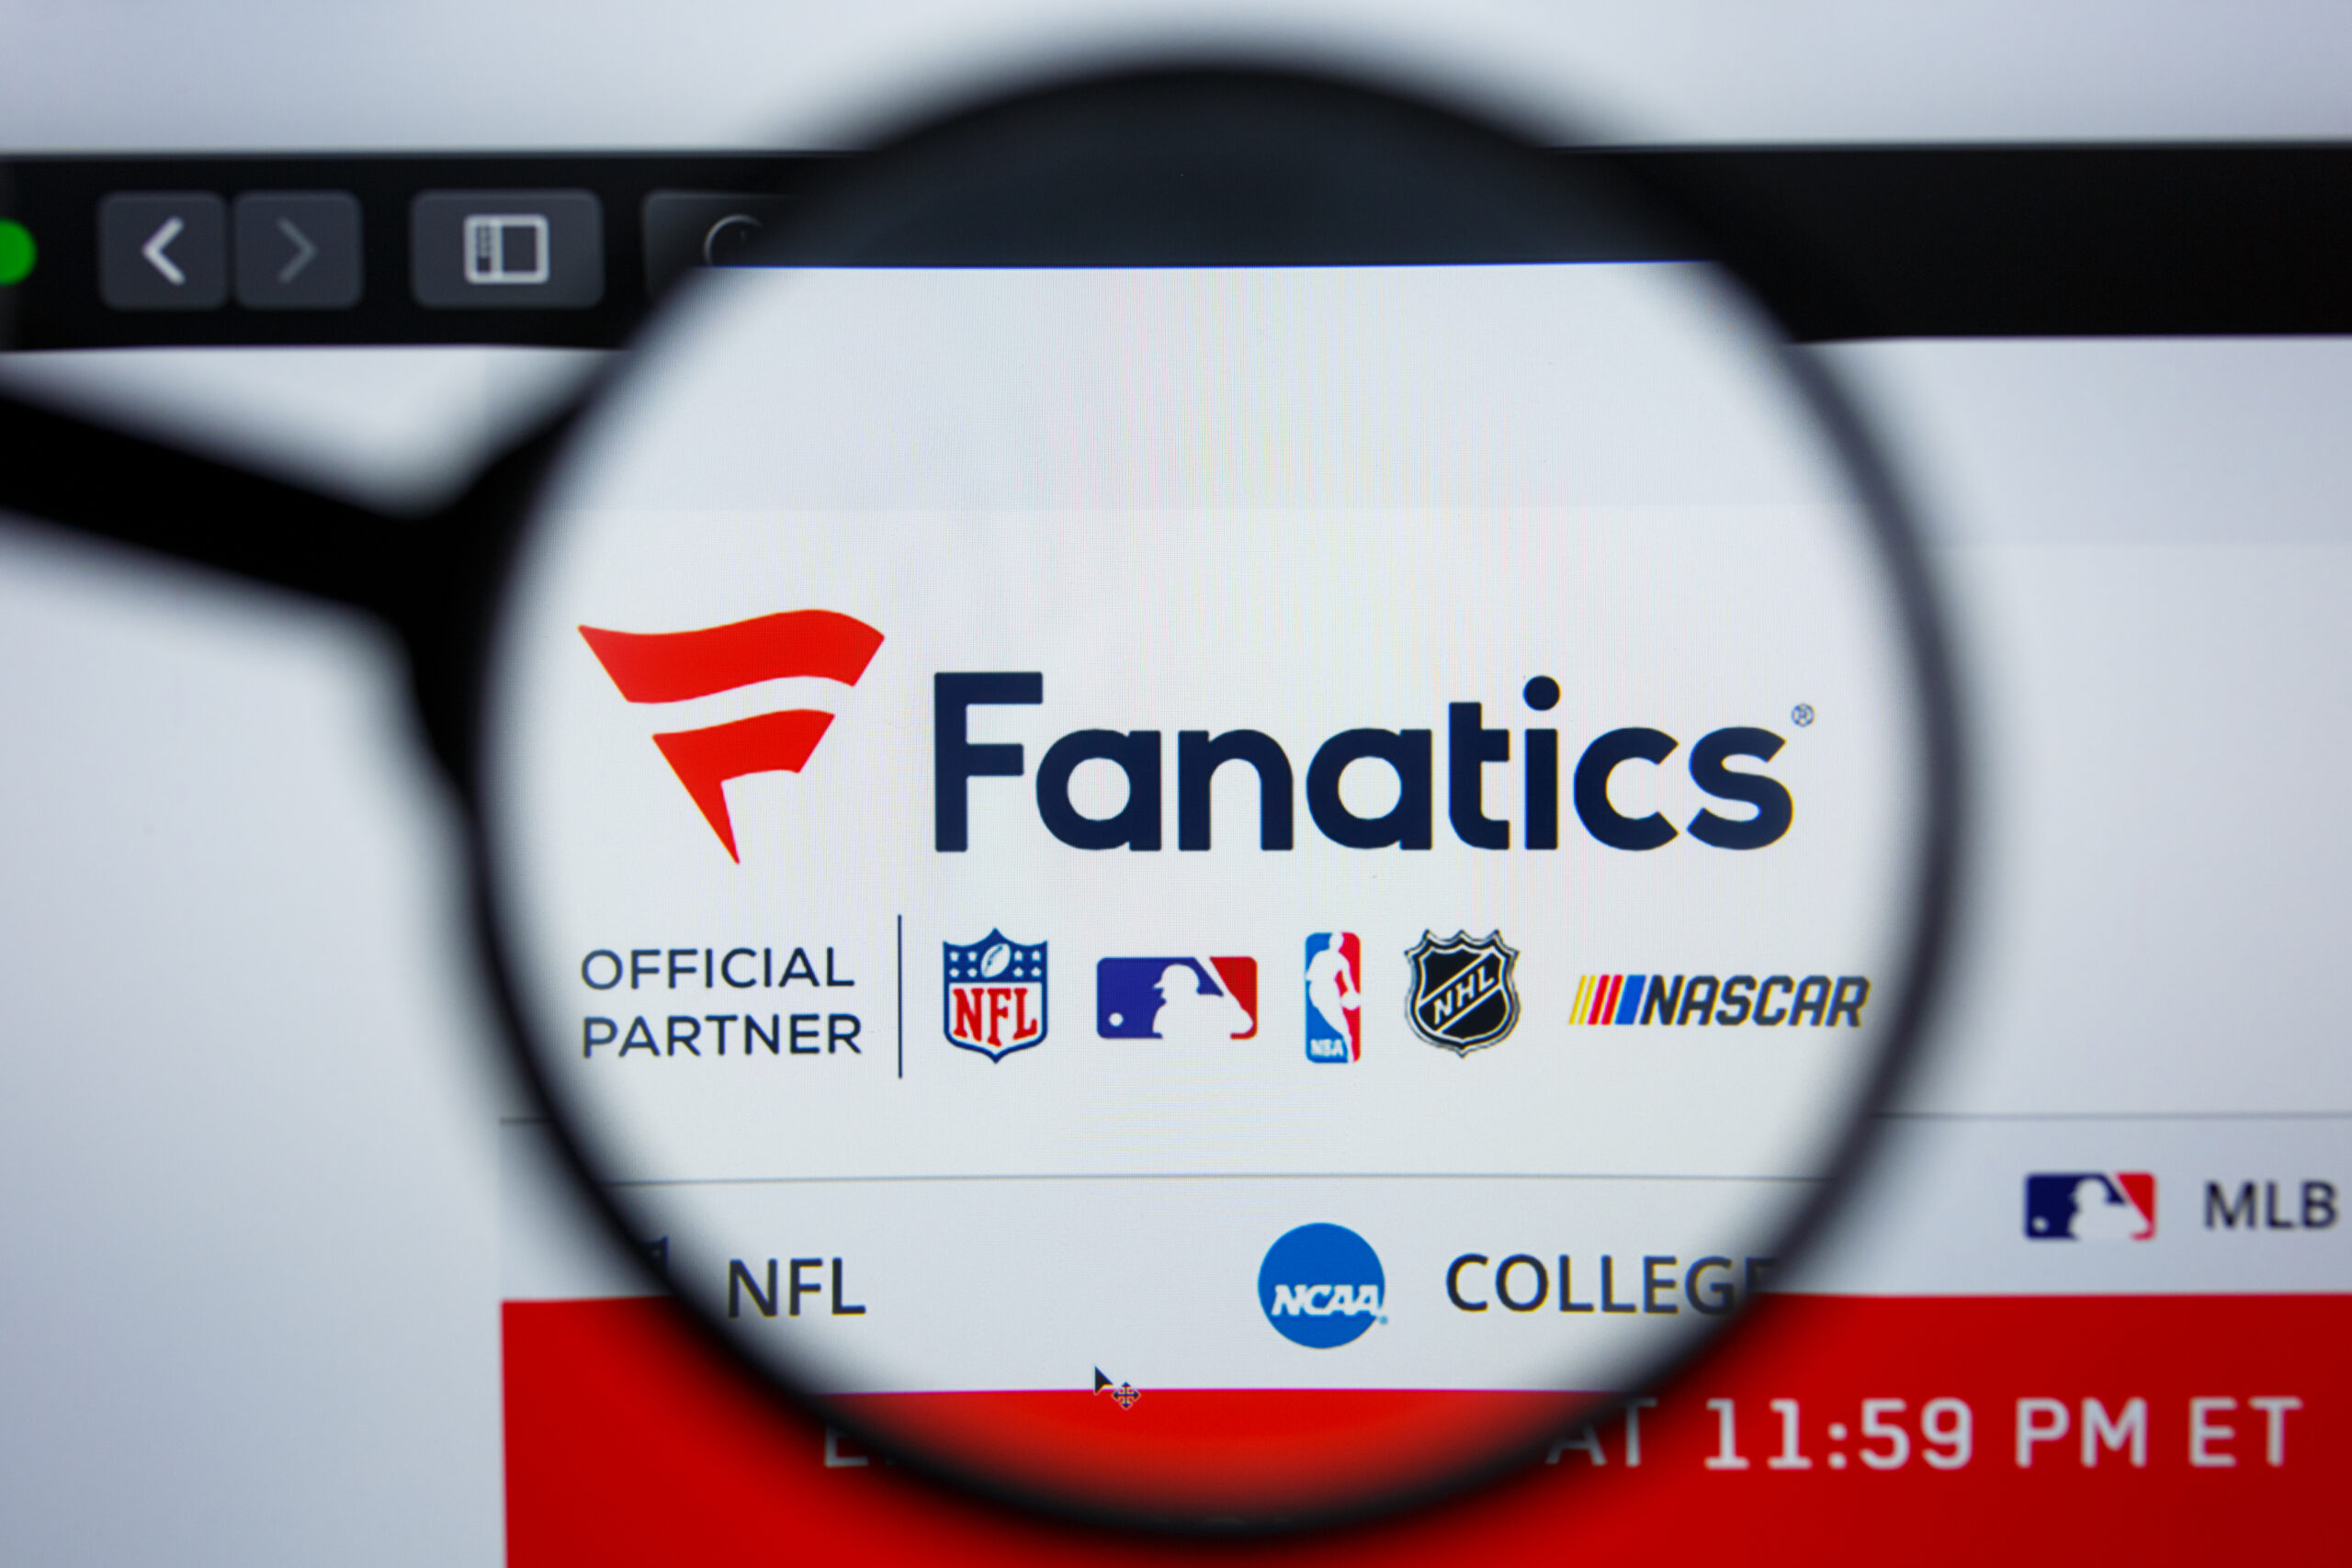 Fanatics website logo under a magnifying glass